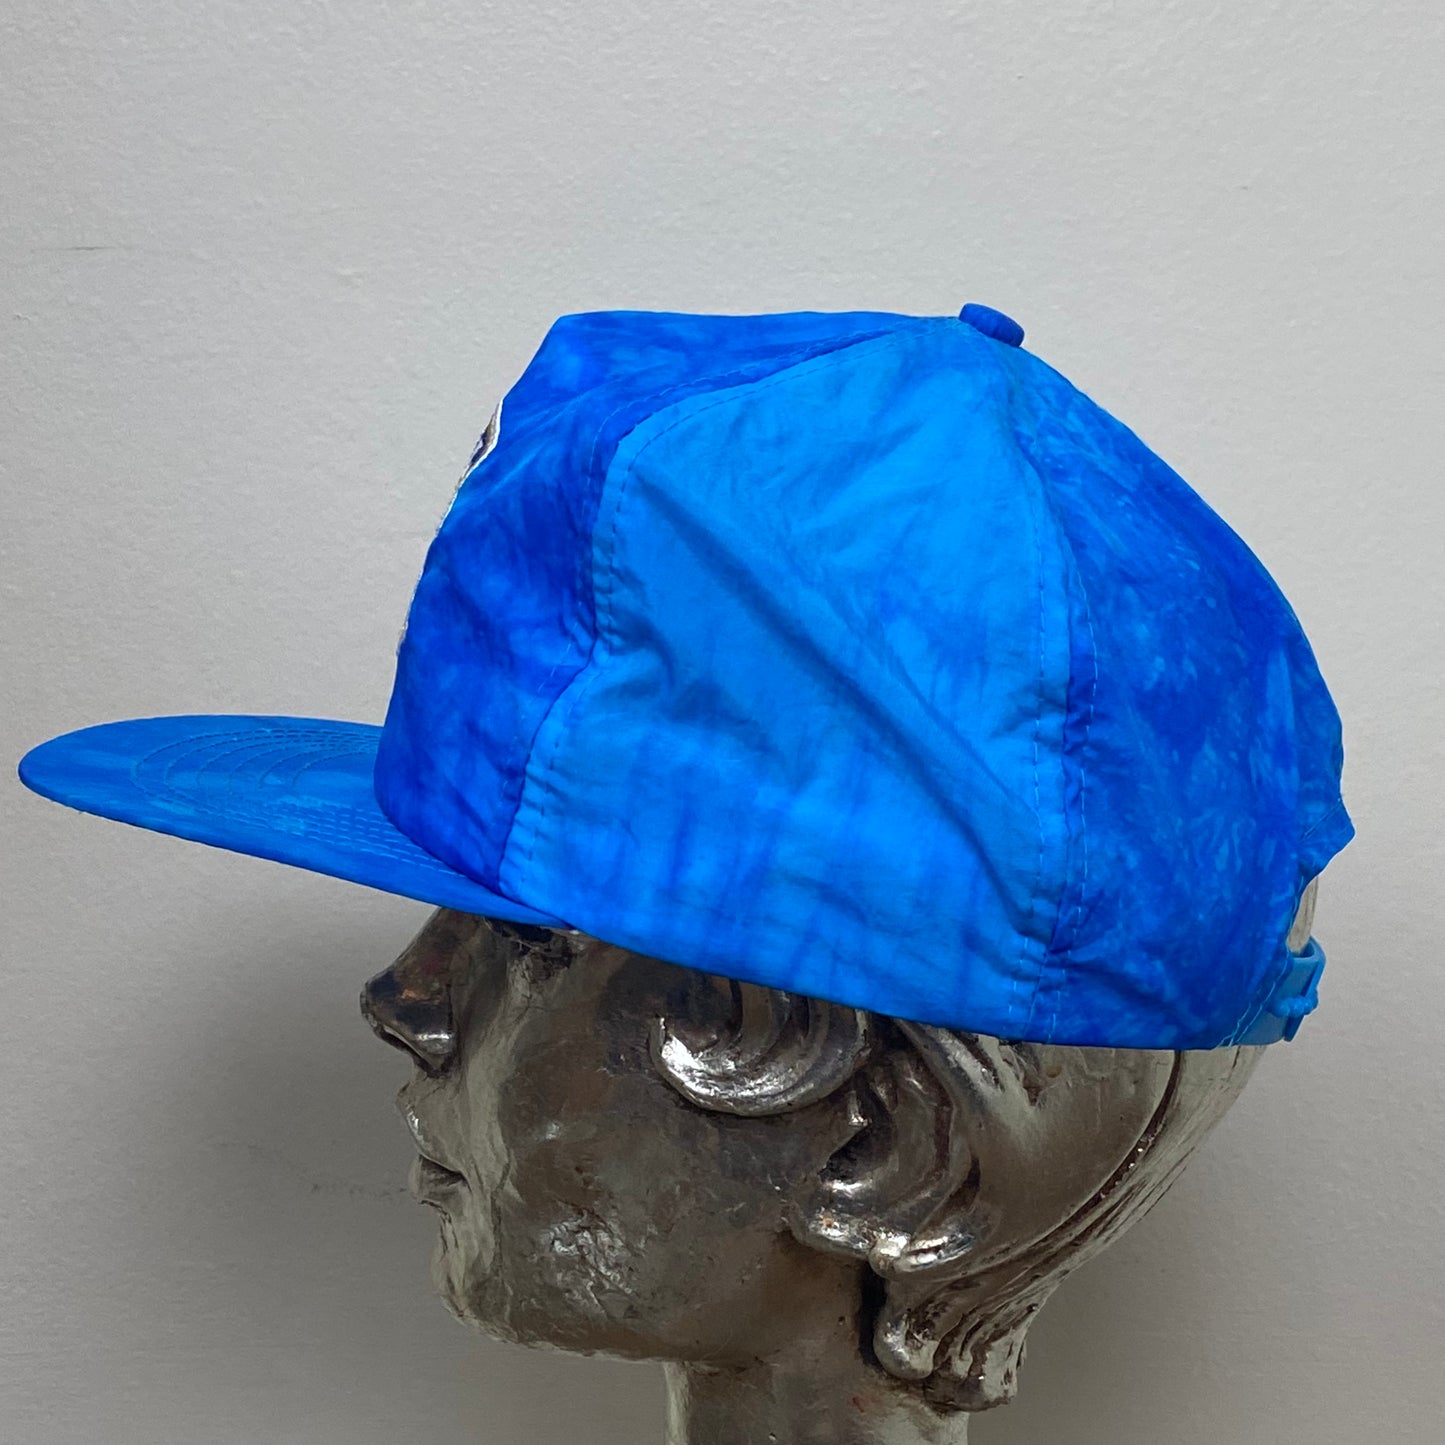 1990s Joe Camel Snapback Hat, Blue Tie Dye Nylon, One Size Fits Most